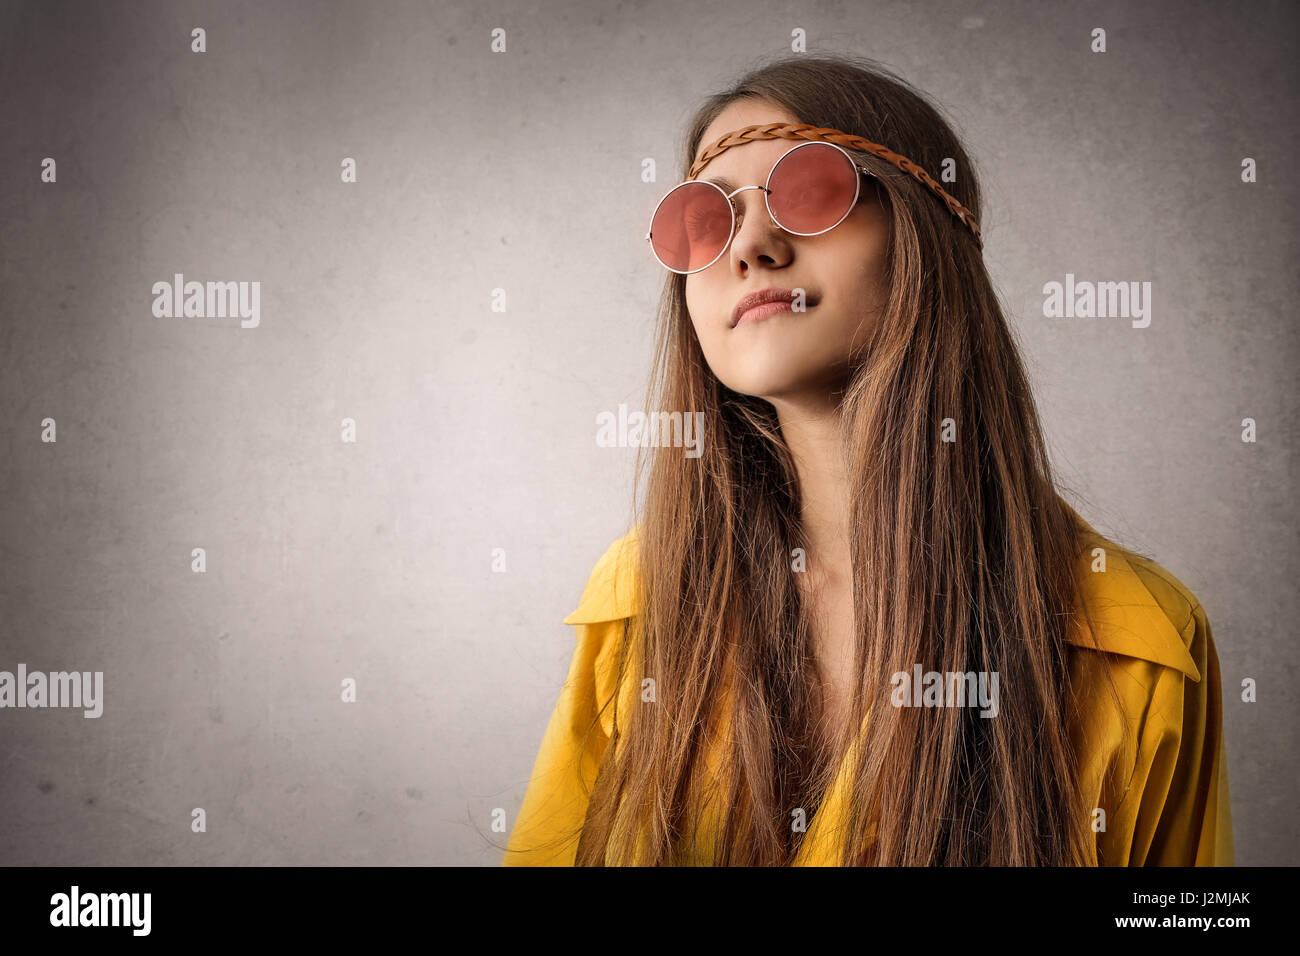 Hippy woman in sunglasses Stock Photo